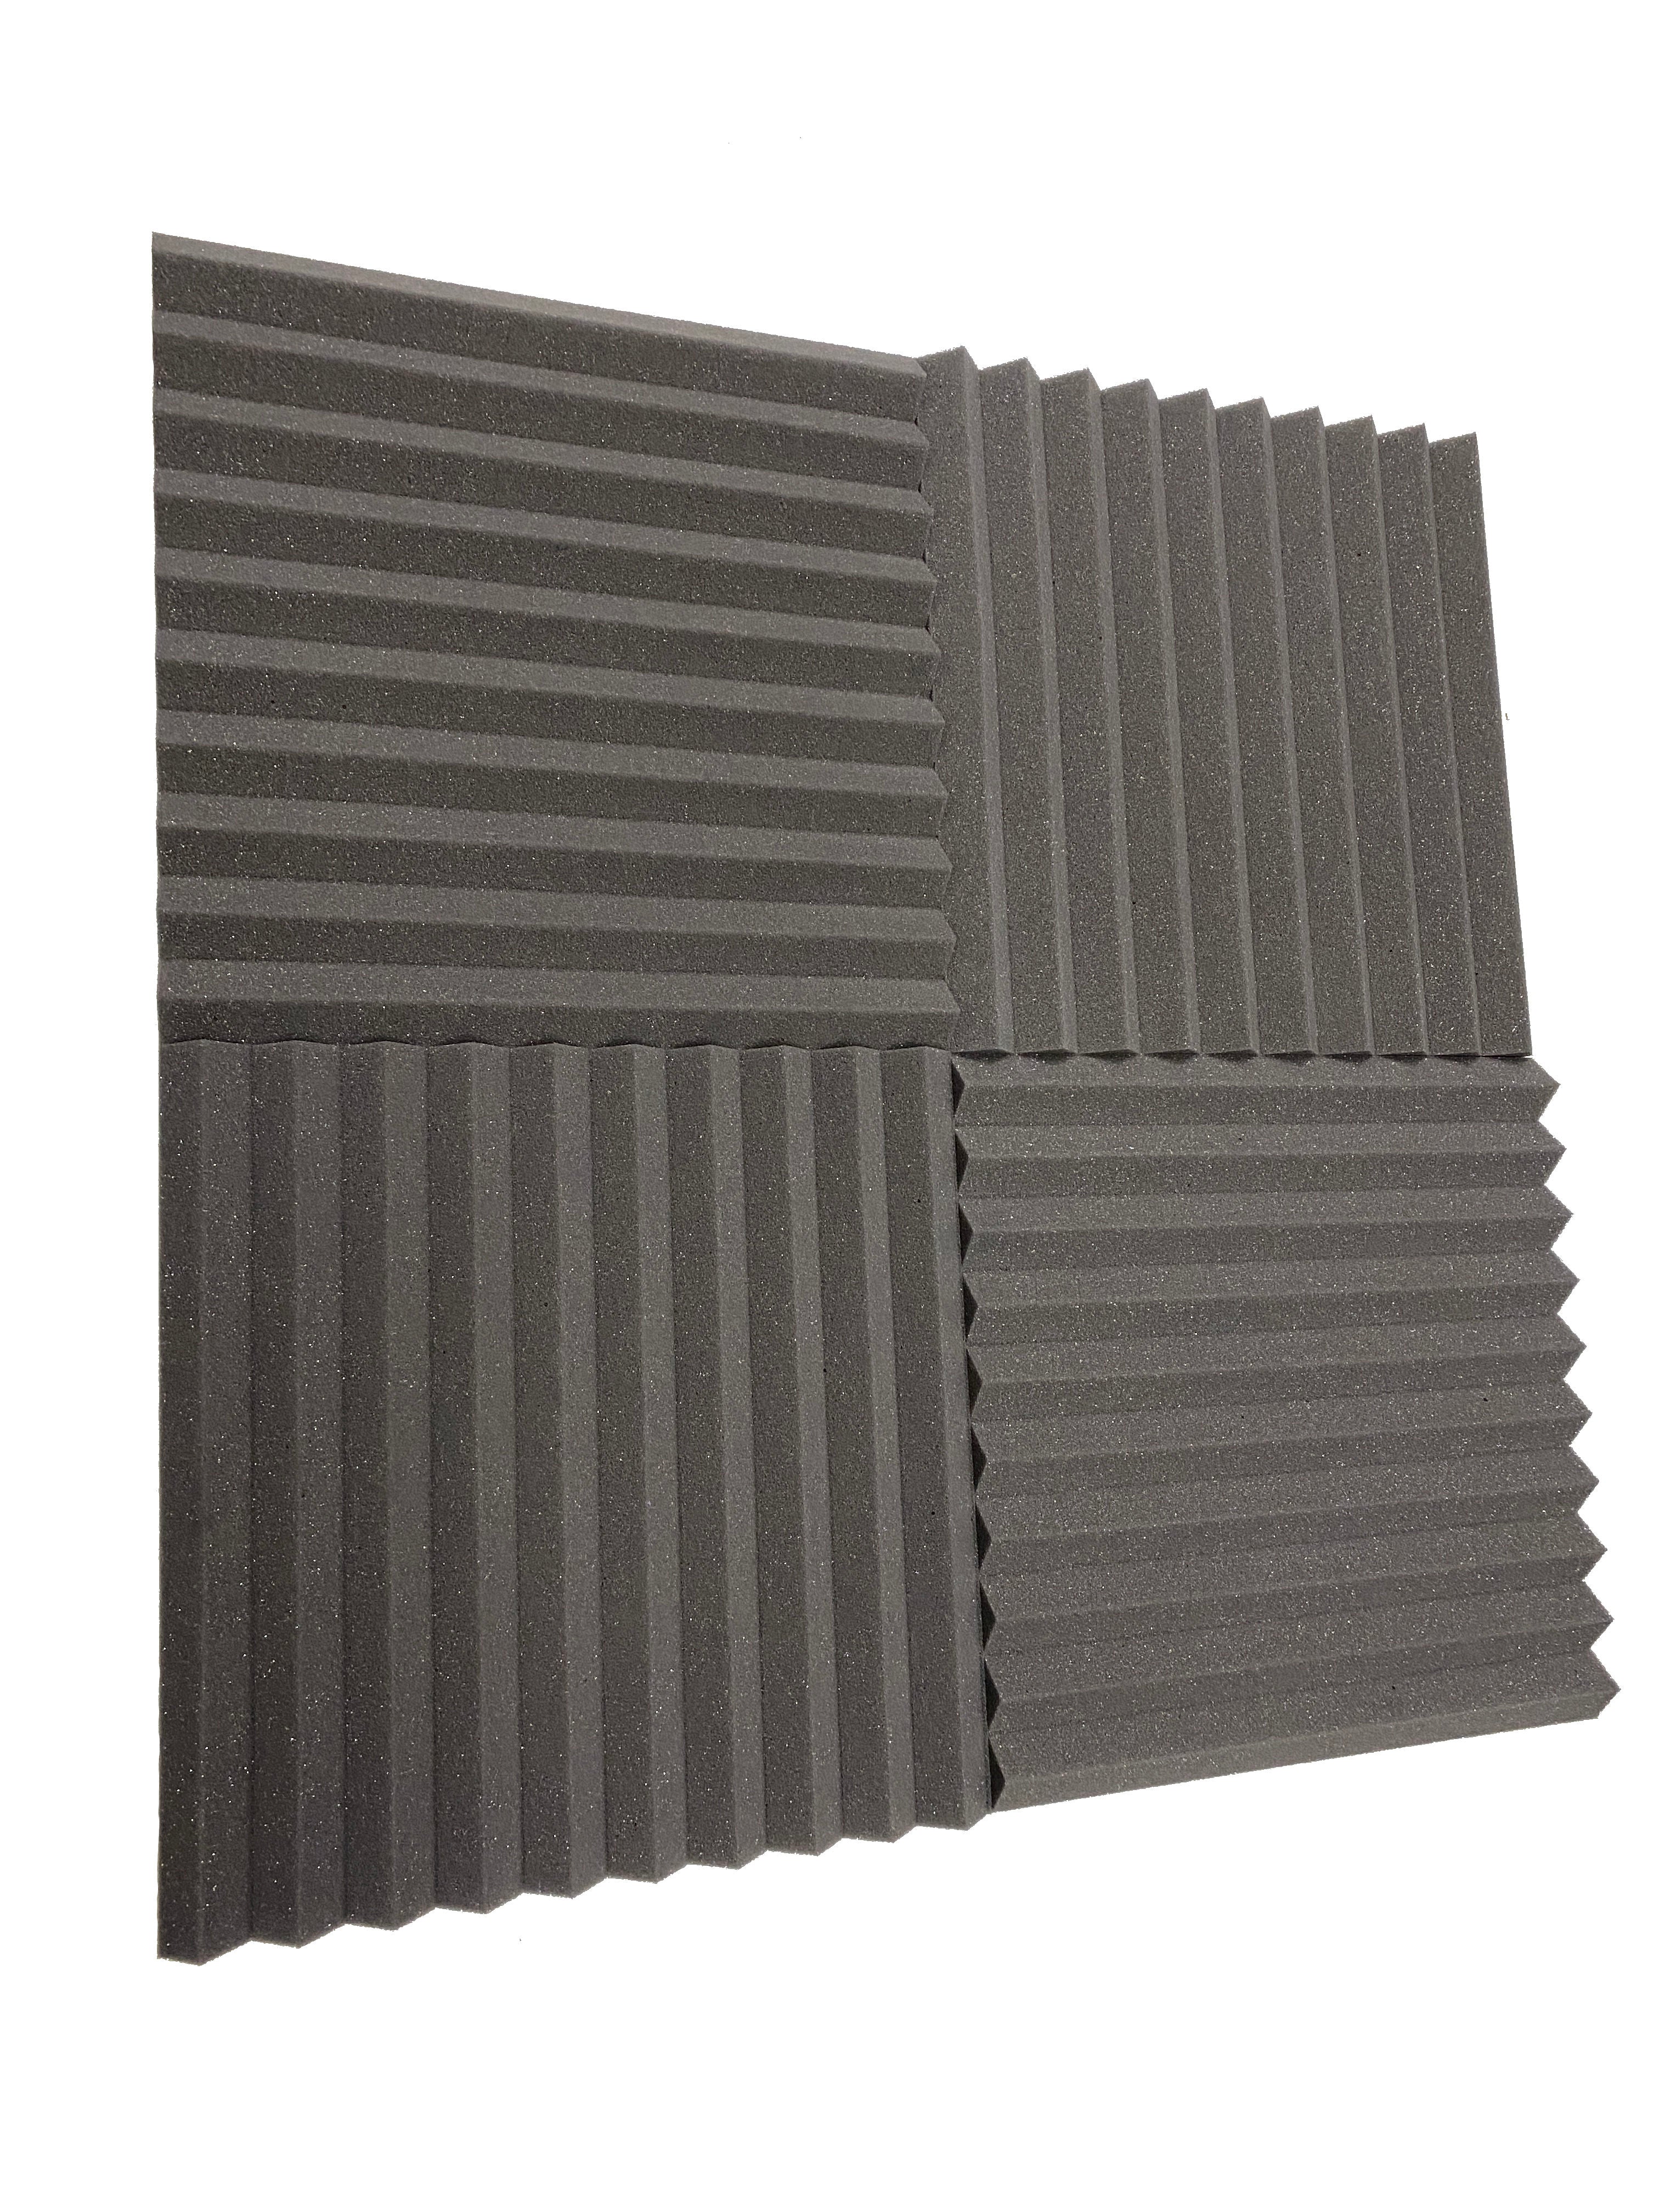 Wedge 15" Acoustic Studio Foam Tile Kit – 72 Fliesen, 10,44 m² Abdeckung